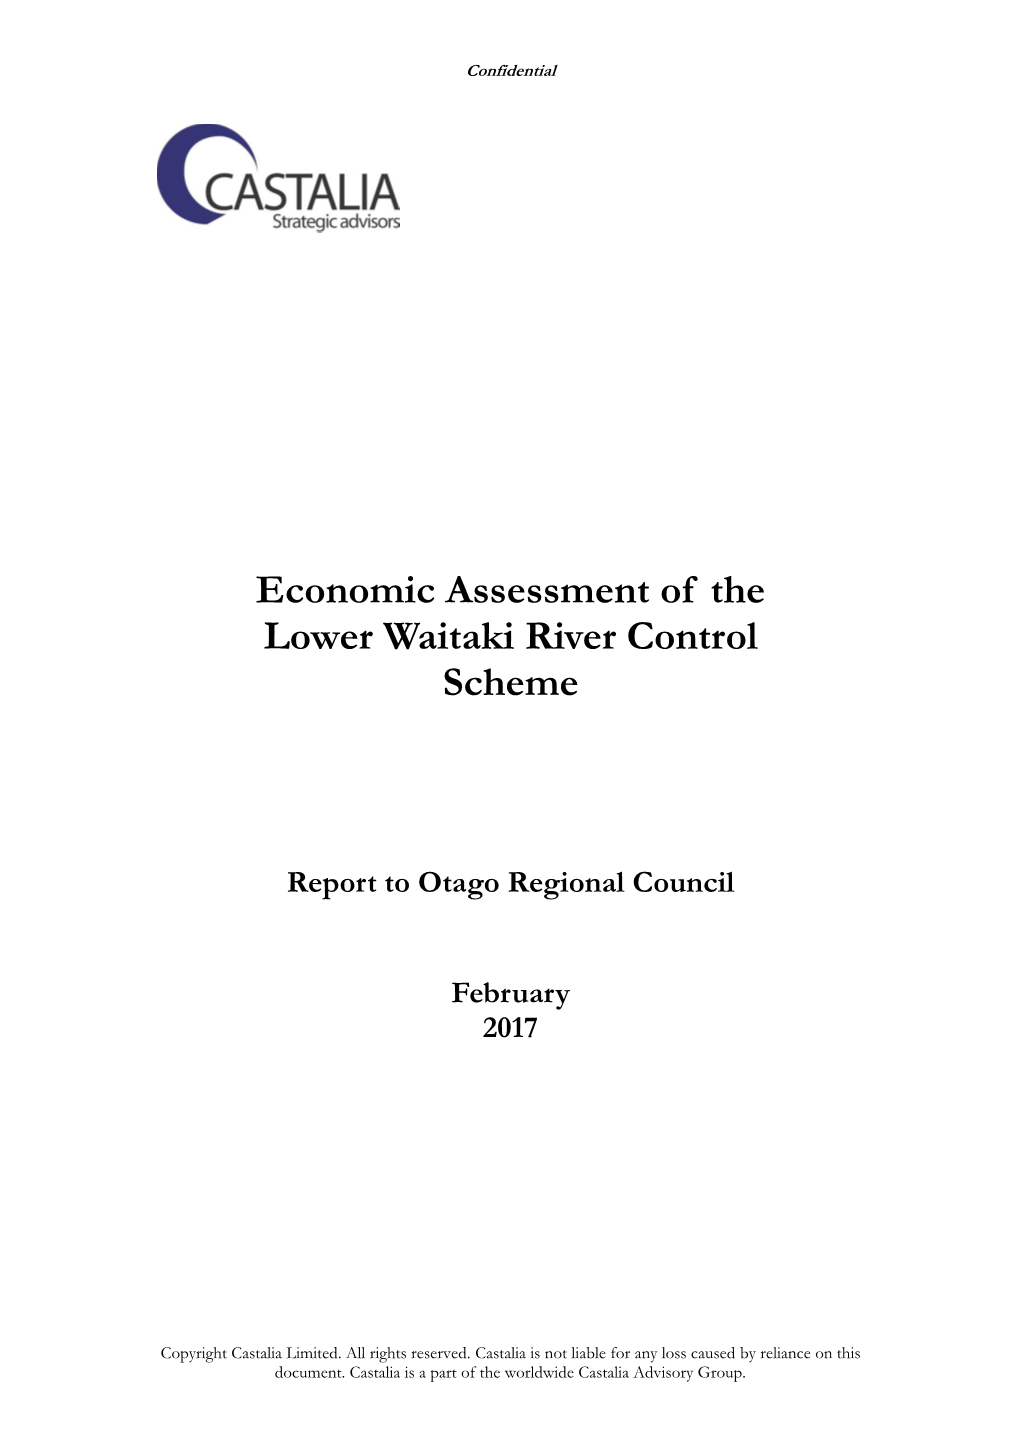 Economic Assessment of the Lower Waitaki River Control Scheme